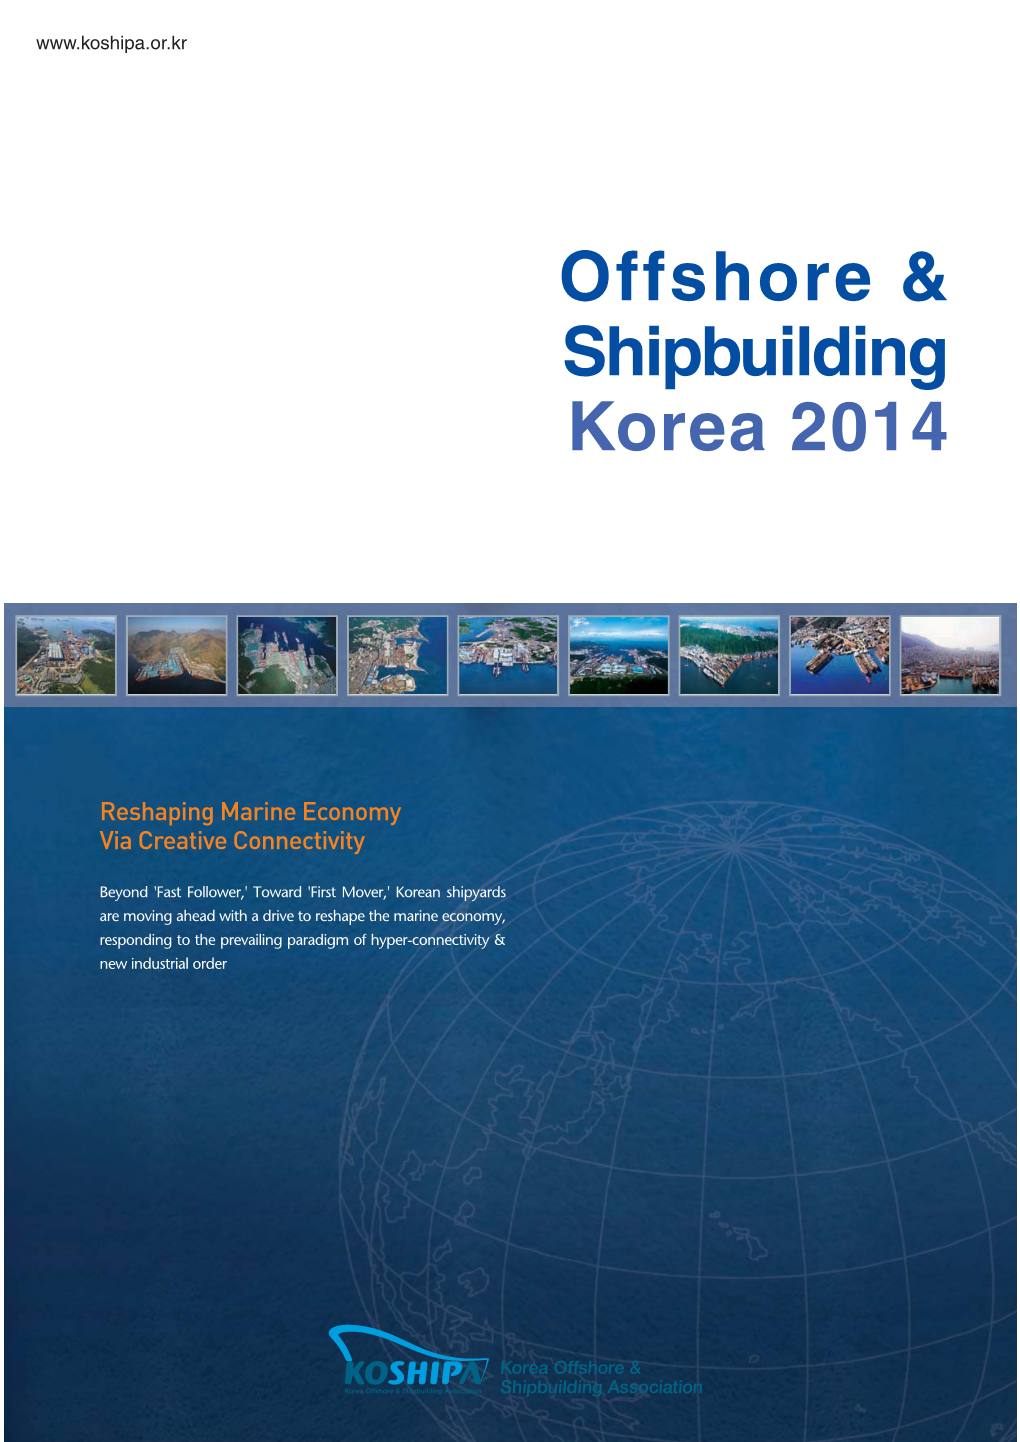 Offshore & Shipbuilding Korea 2014